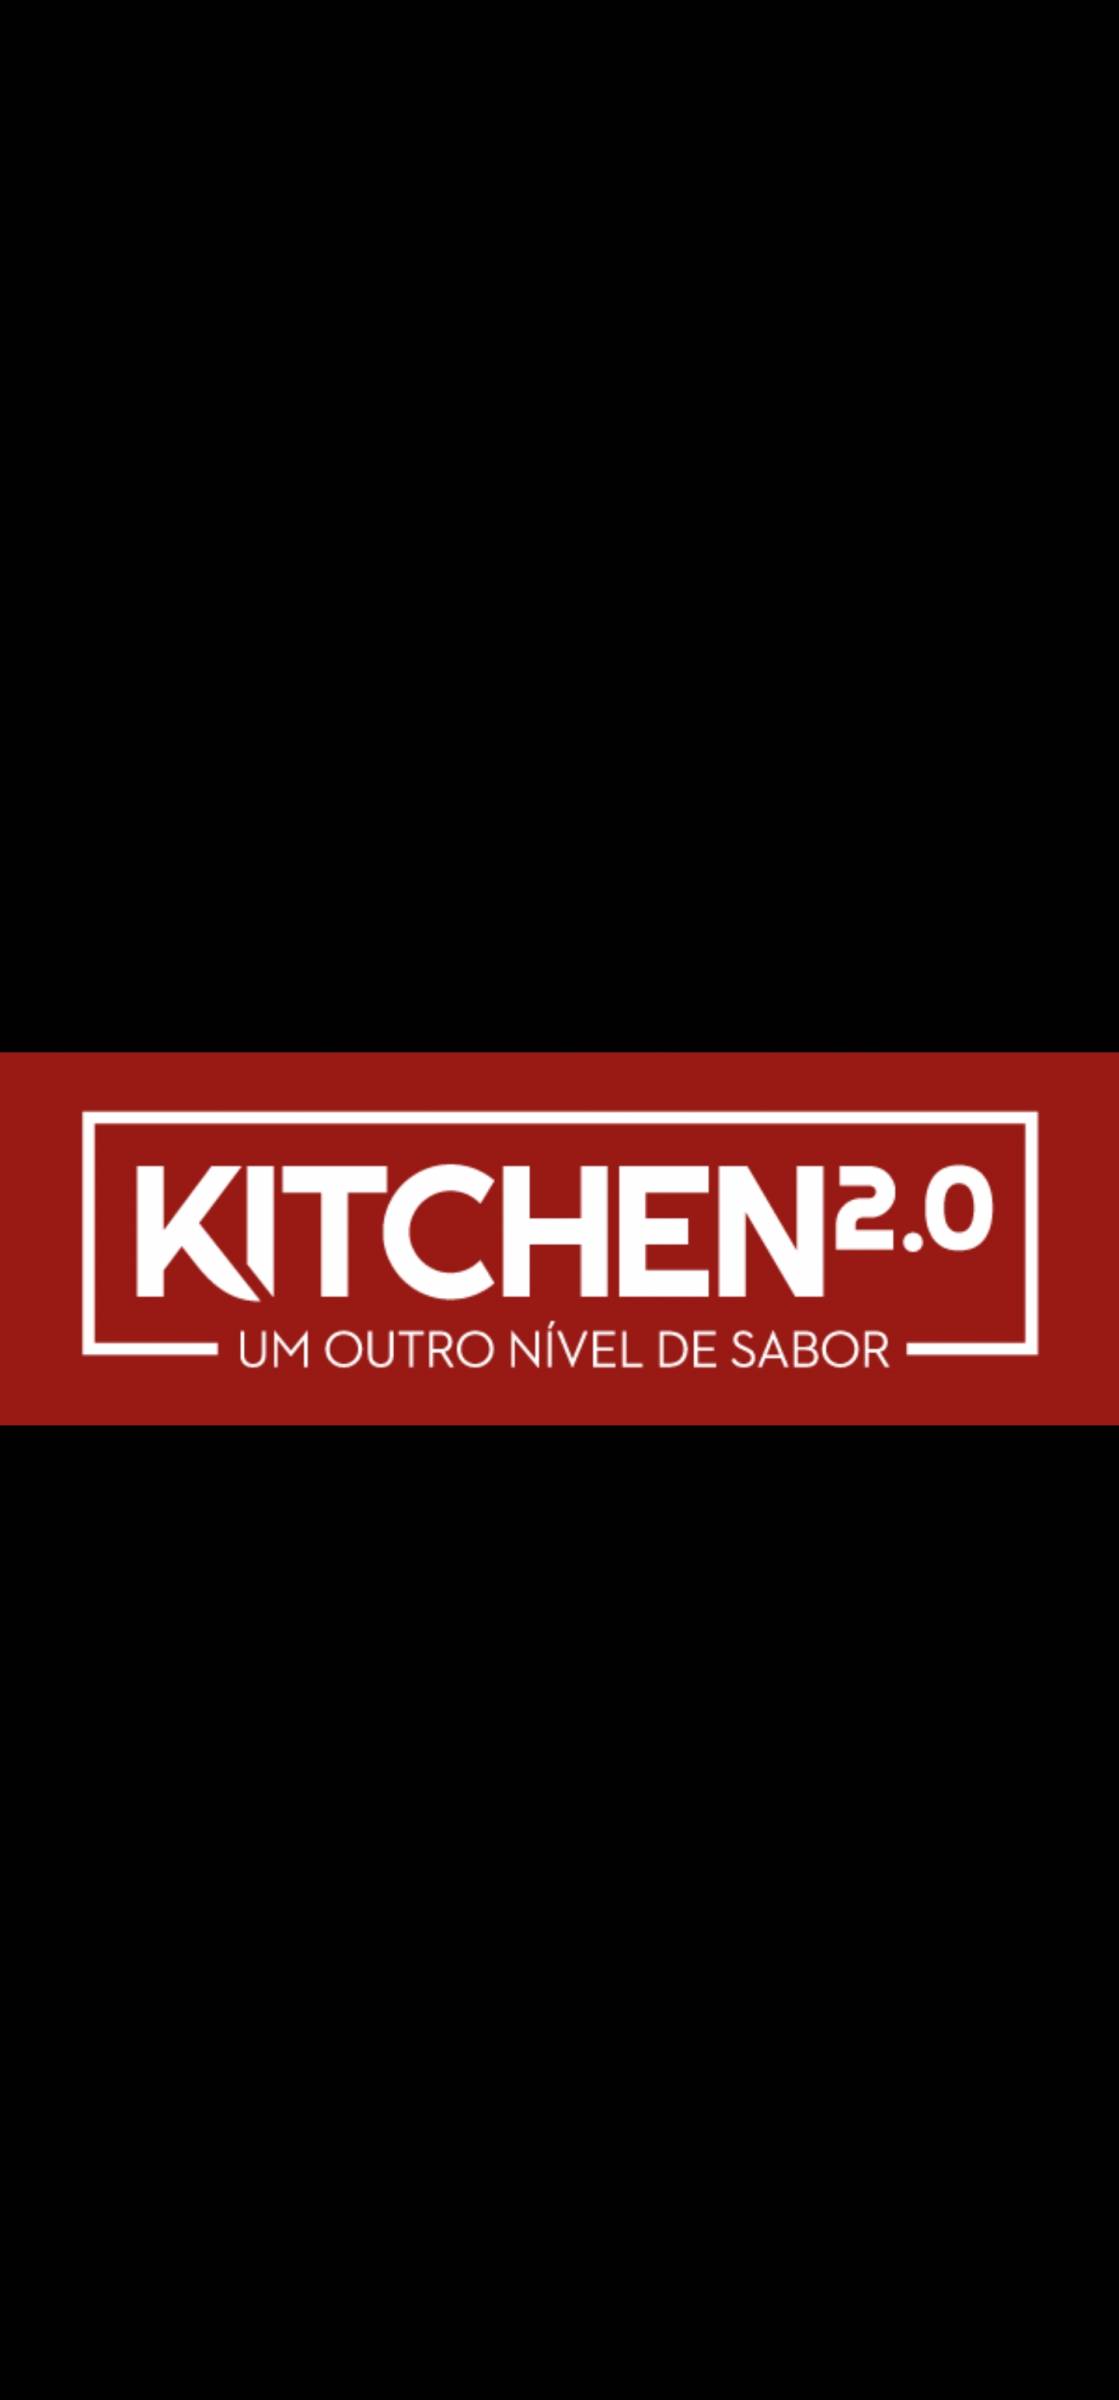 Kitchen 2.0 - Cascais - Catering para Eventos (Serviço Completo)